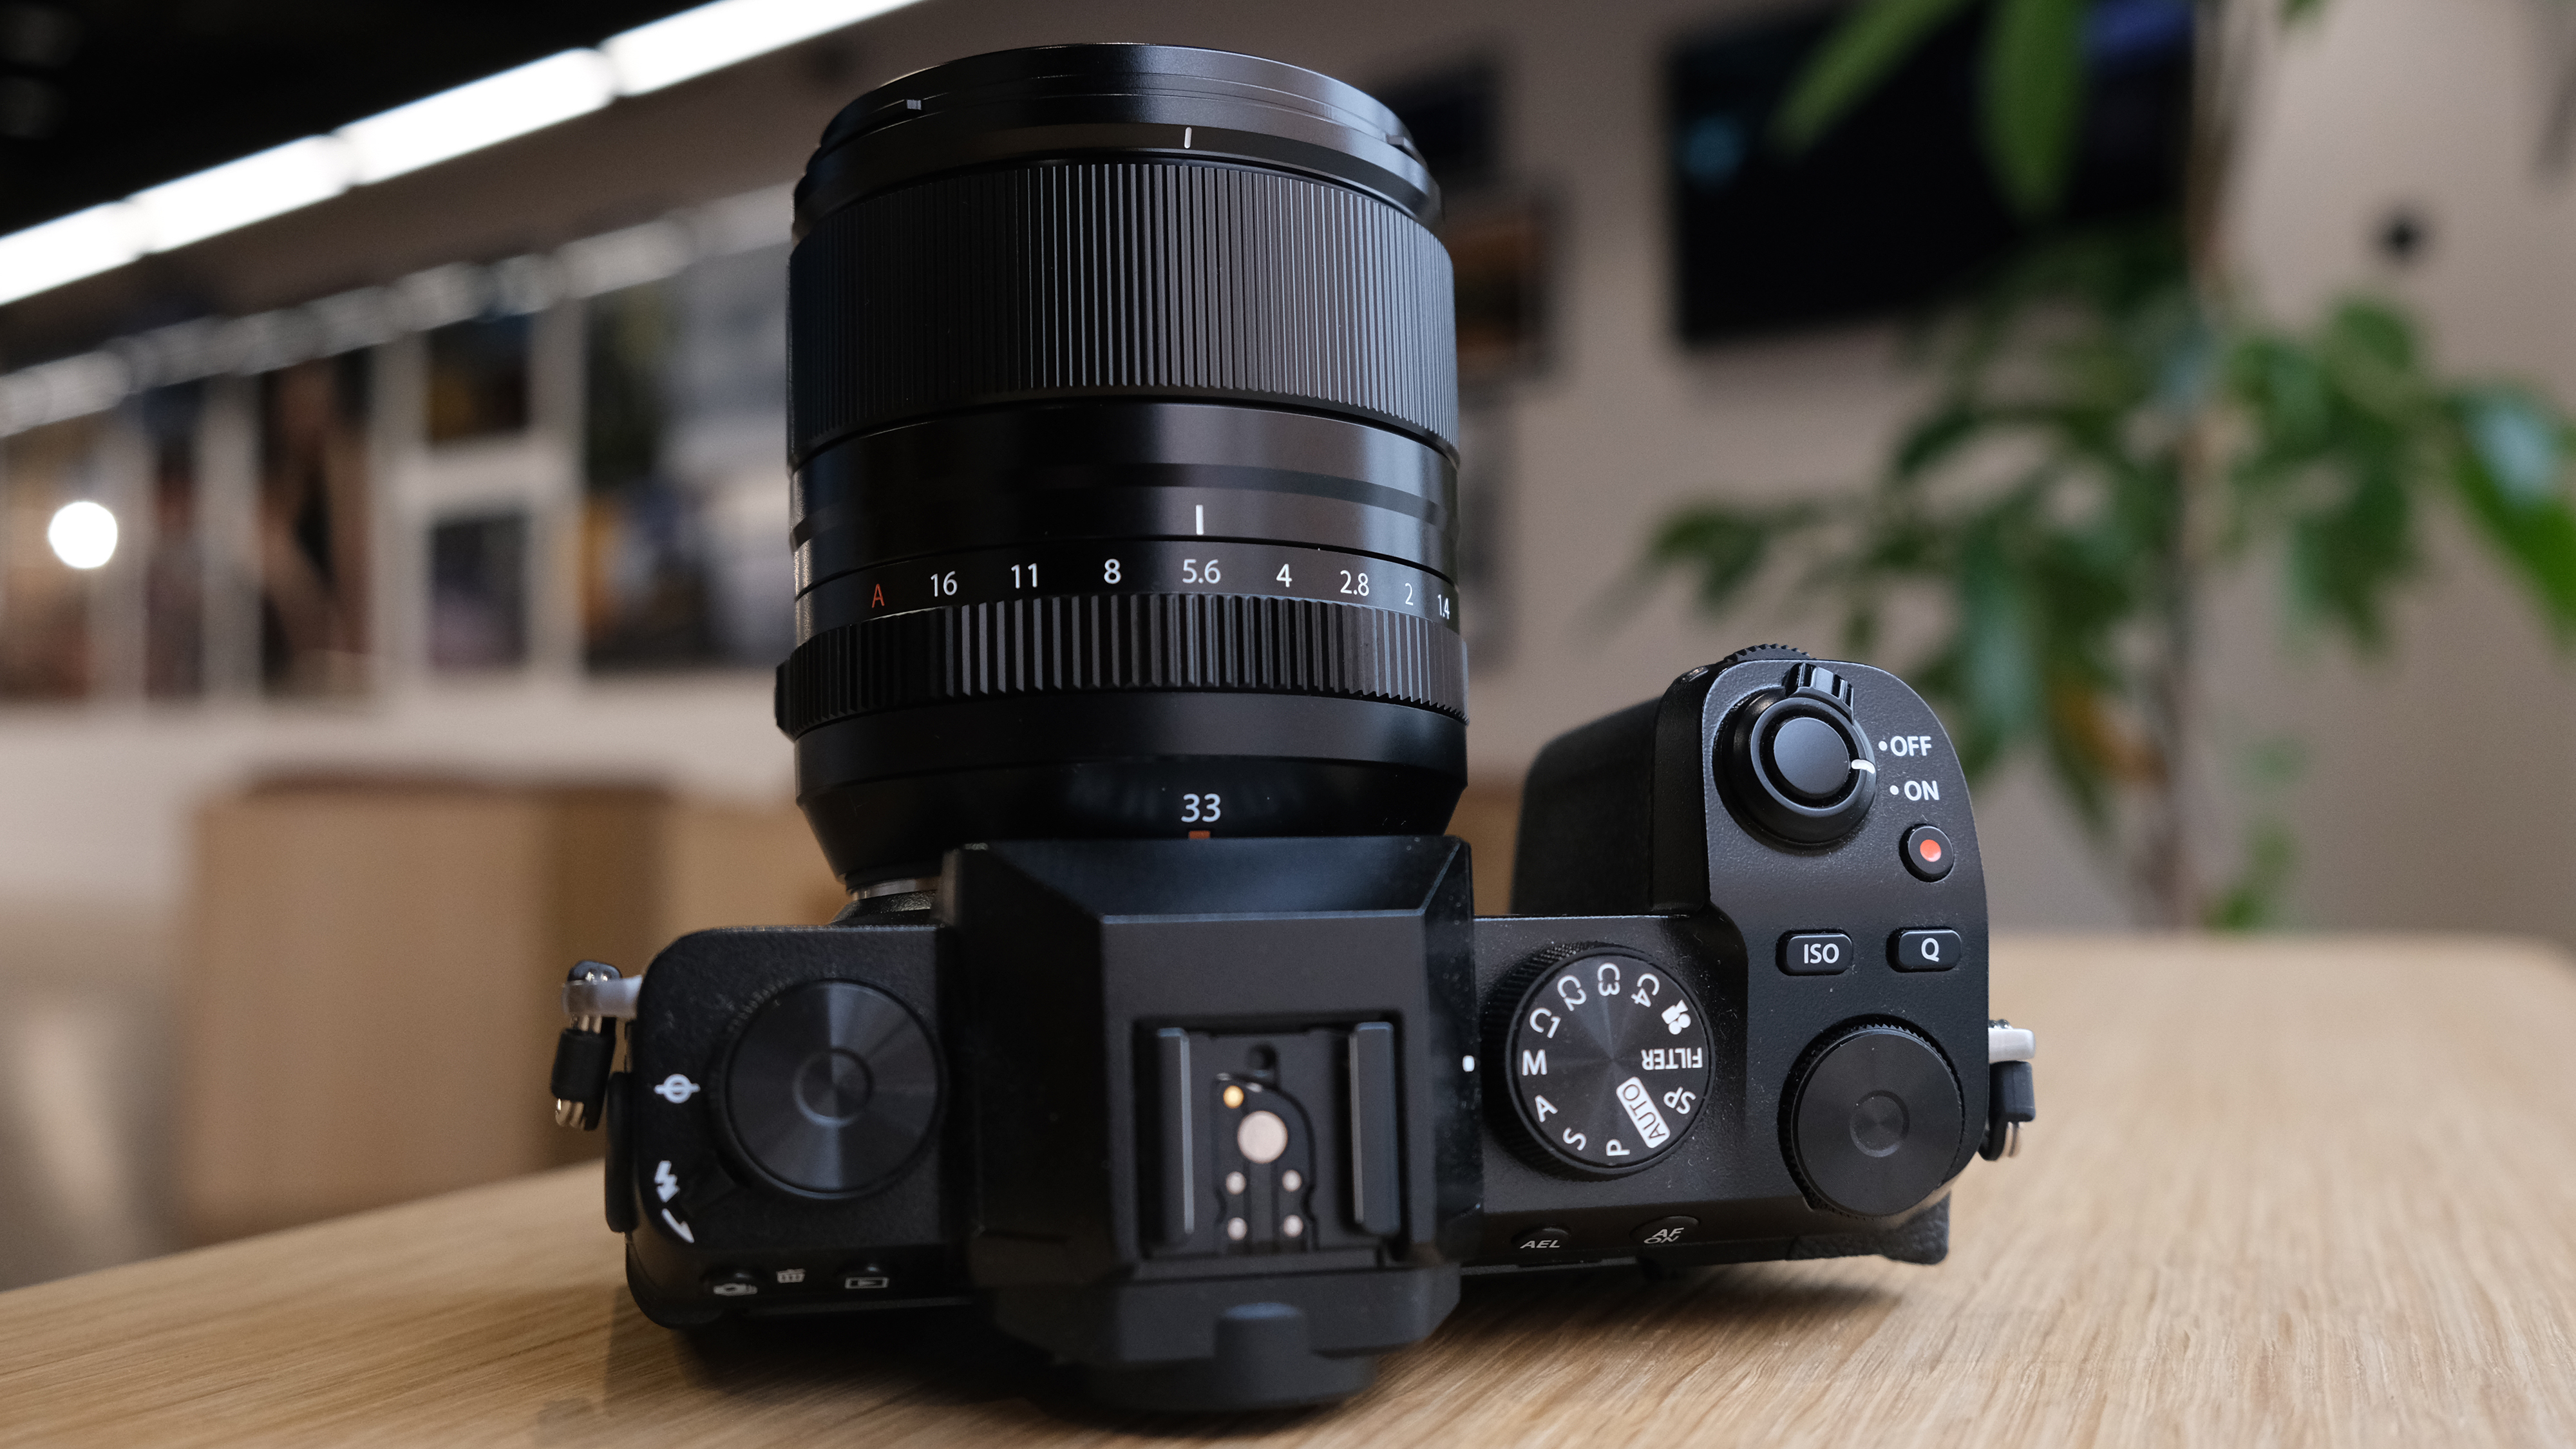 The Fujifilm XF33mm f/1.4 lens on a Fujifilm X-S10 camera